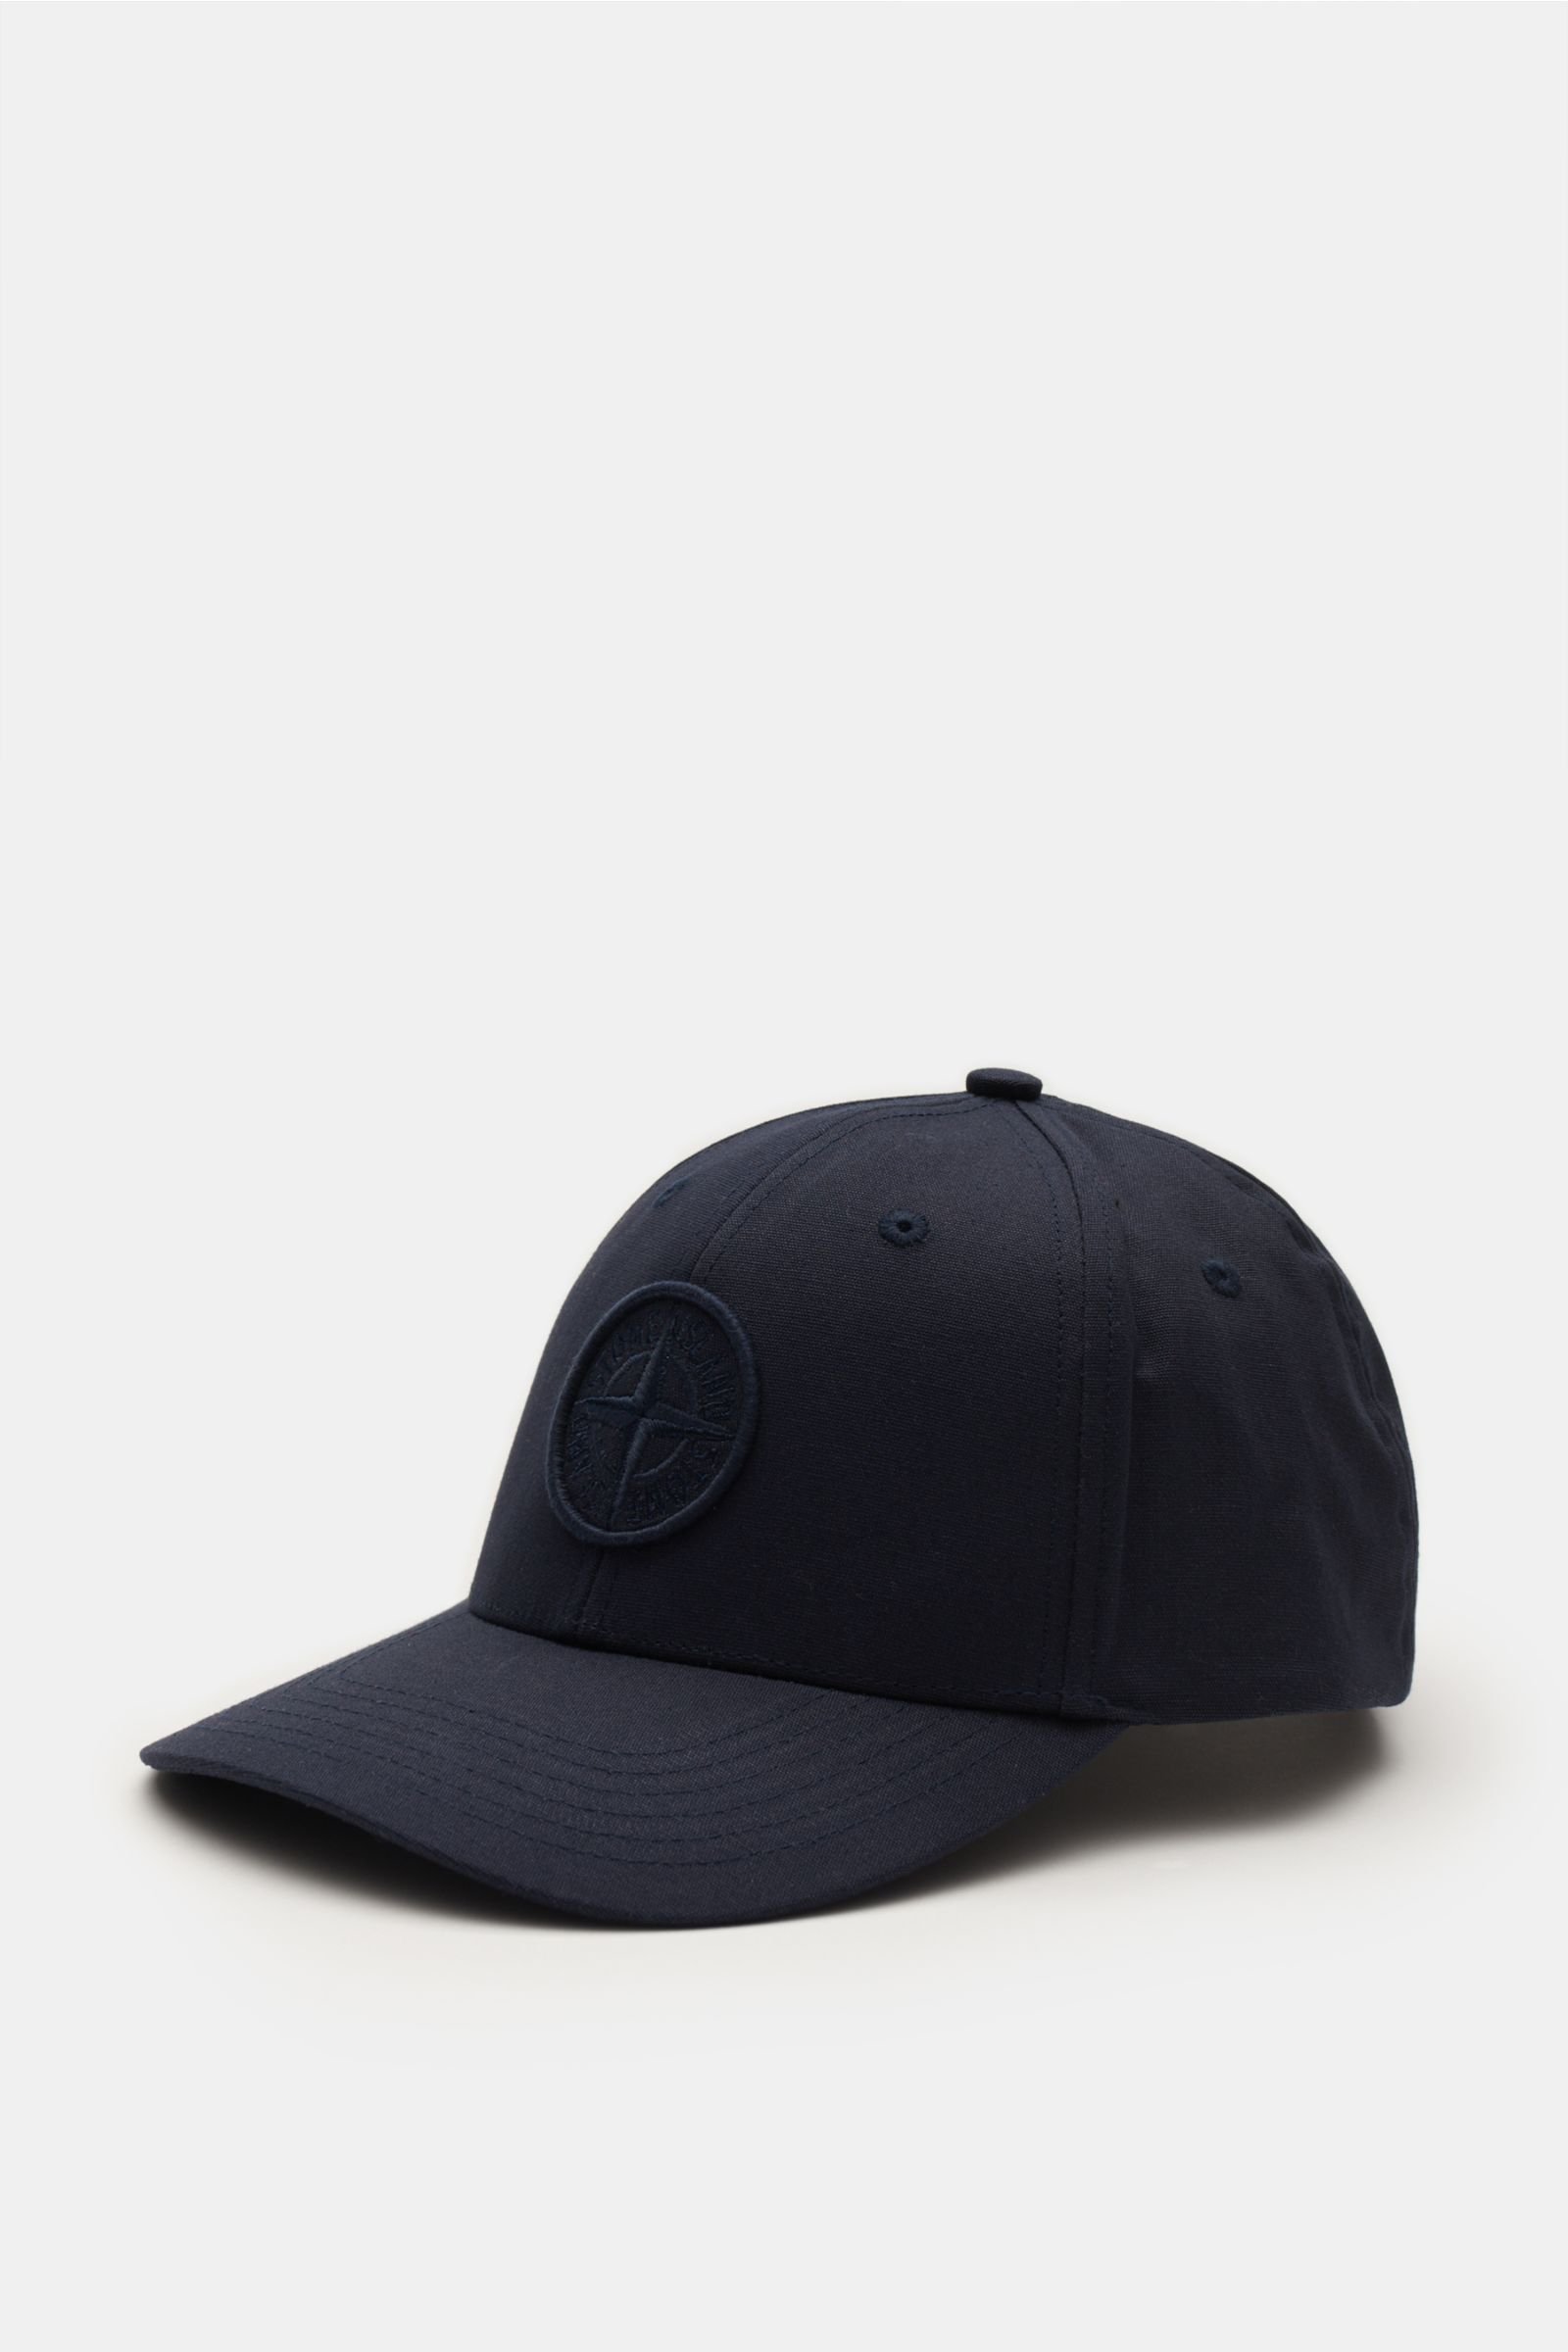 Baseball-Cap navy